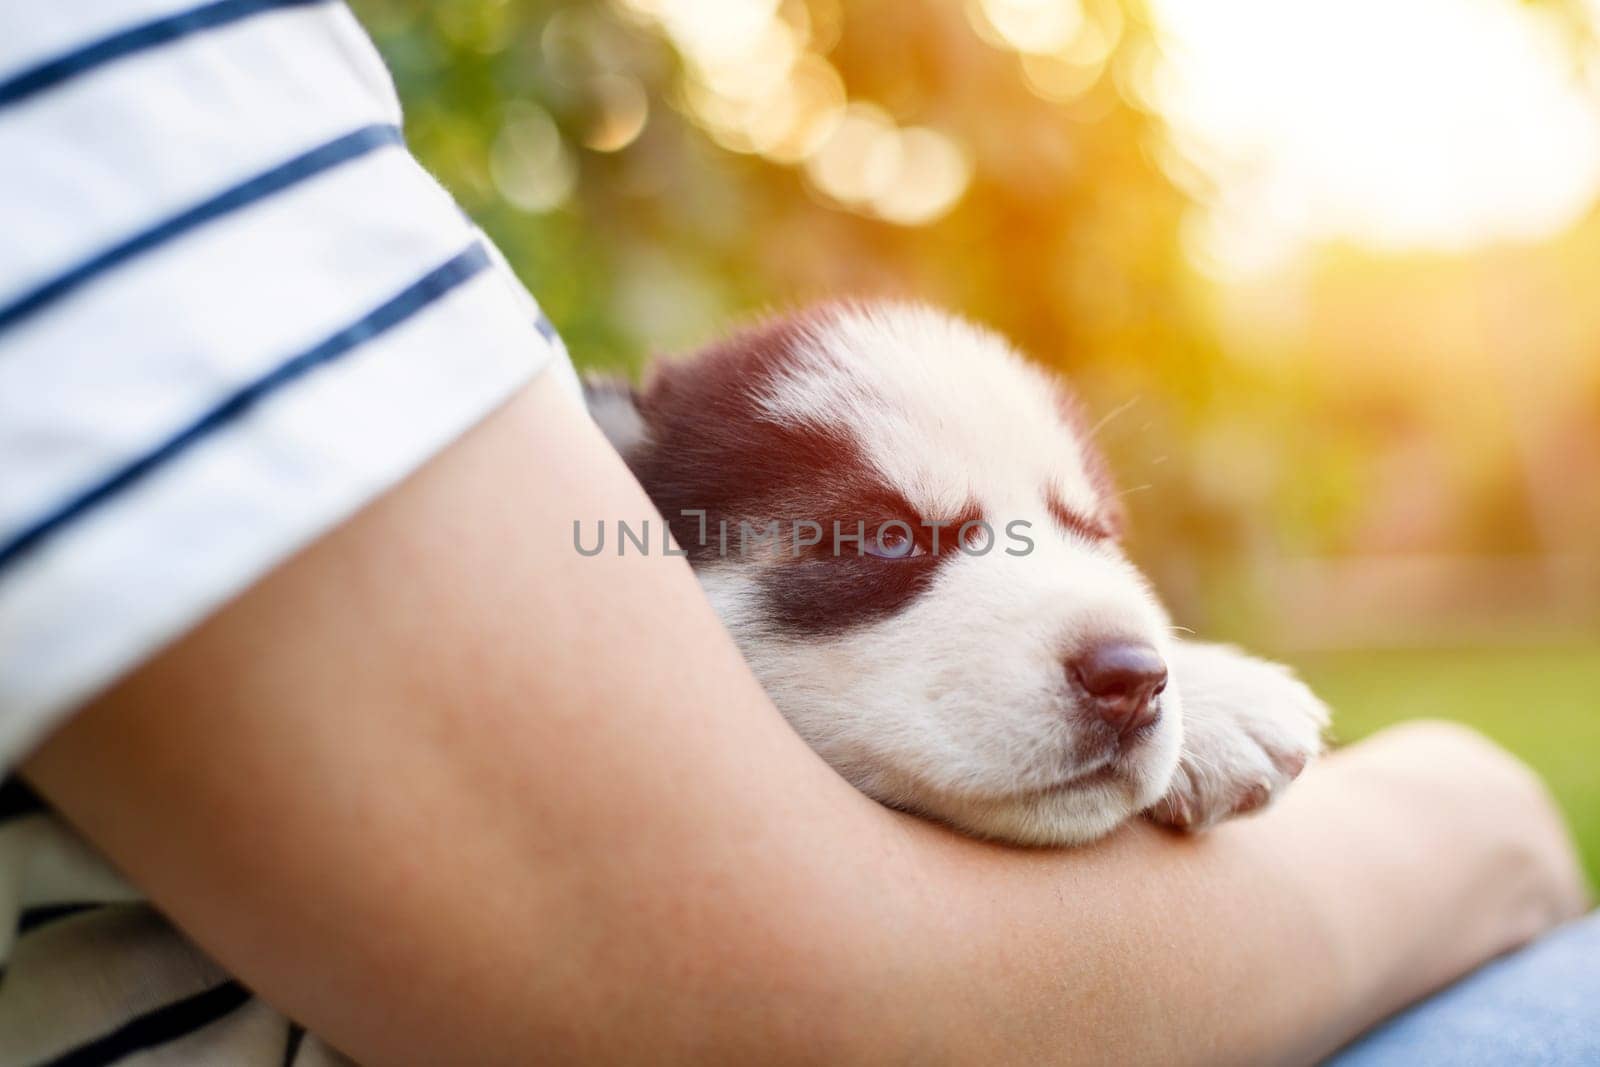 Sleepy Puppy Cuddles in Child's Embrace by andreyz